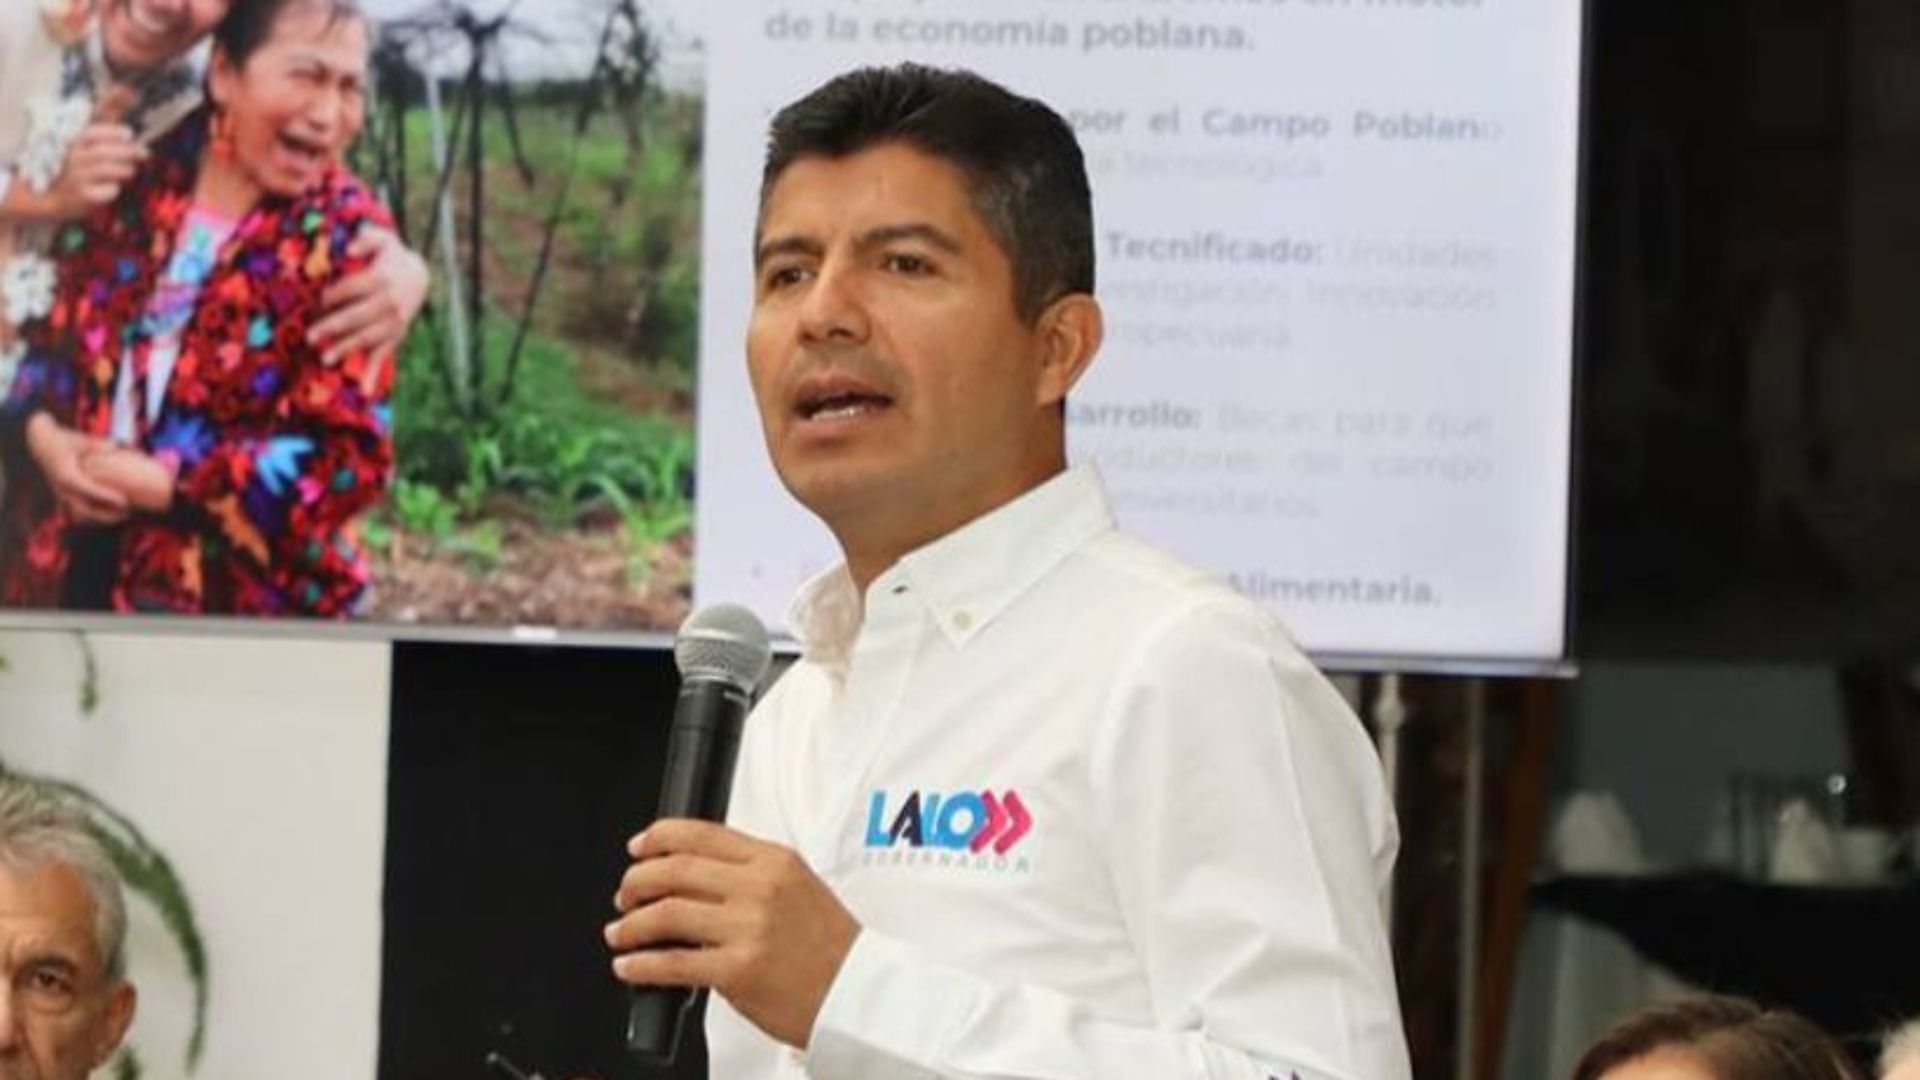 “Mi familia esta bien”: Eduardo Rivera Pérez, aspirante a la gubernatura de Puebla, denunció ataque armado a su casa